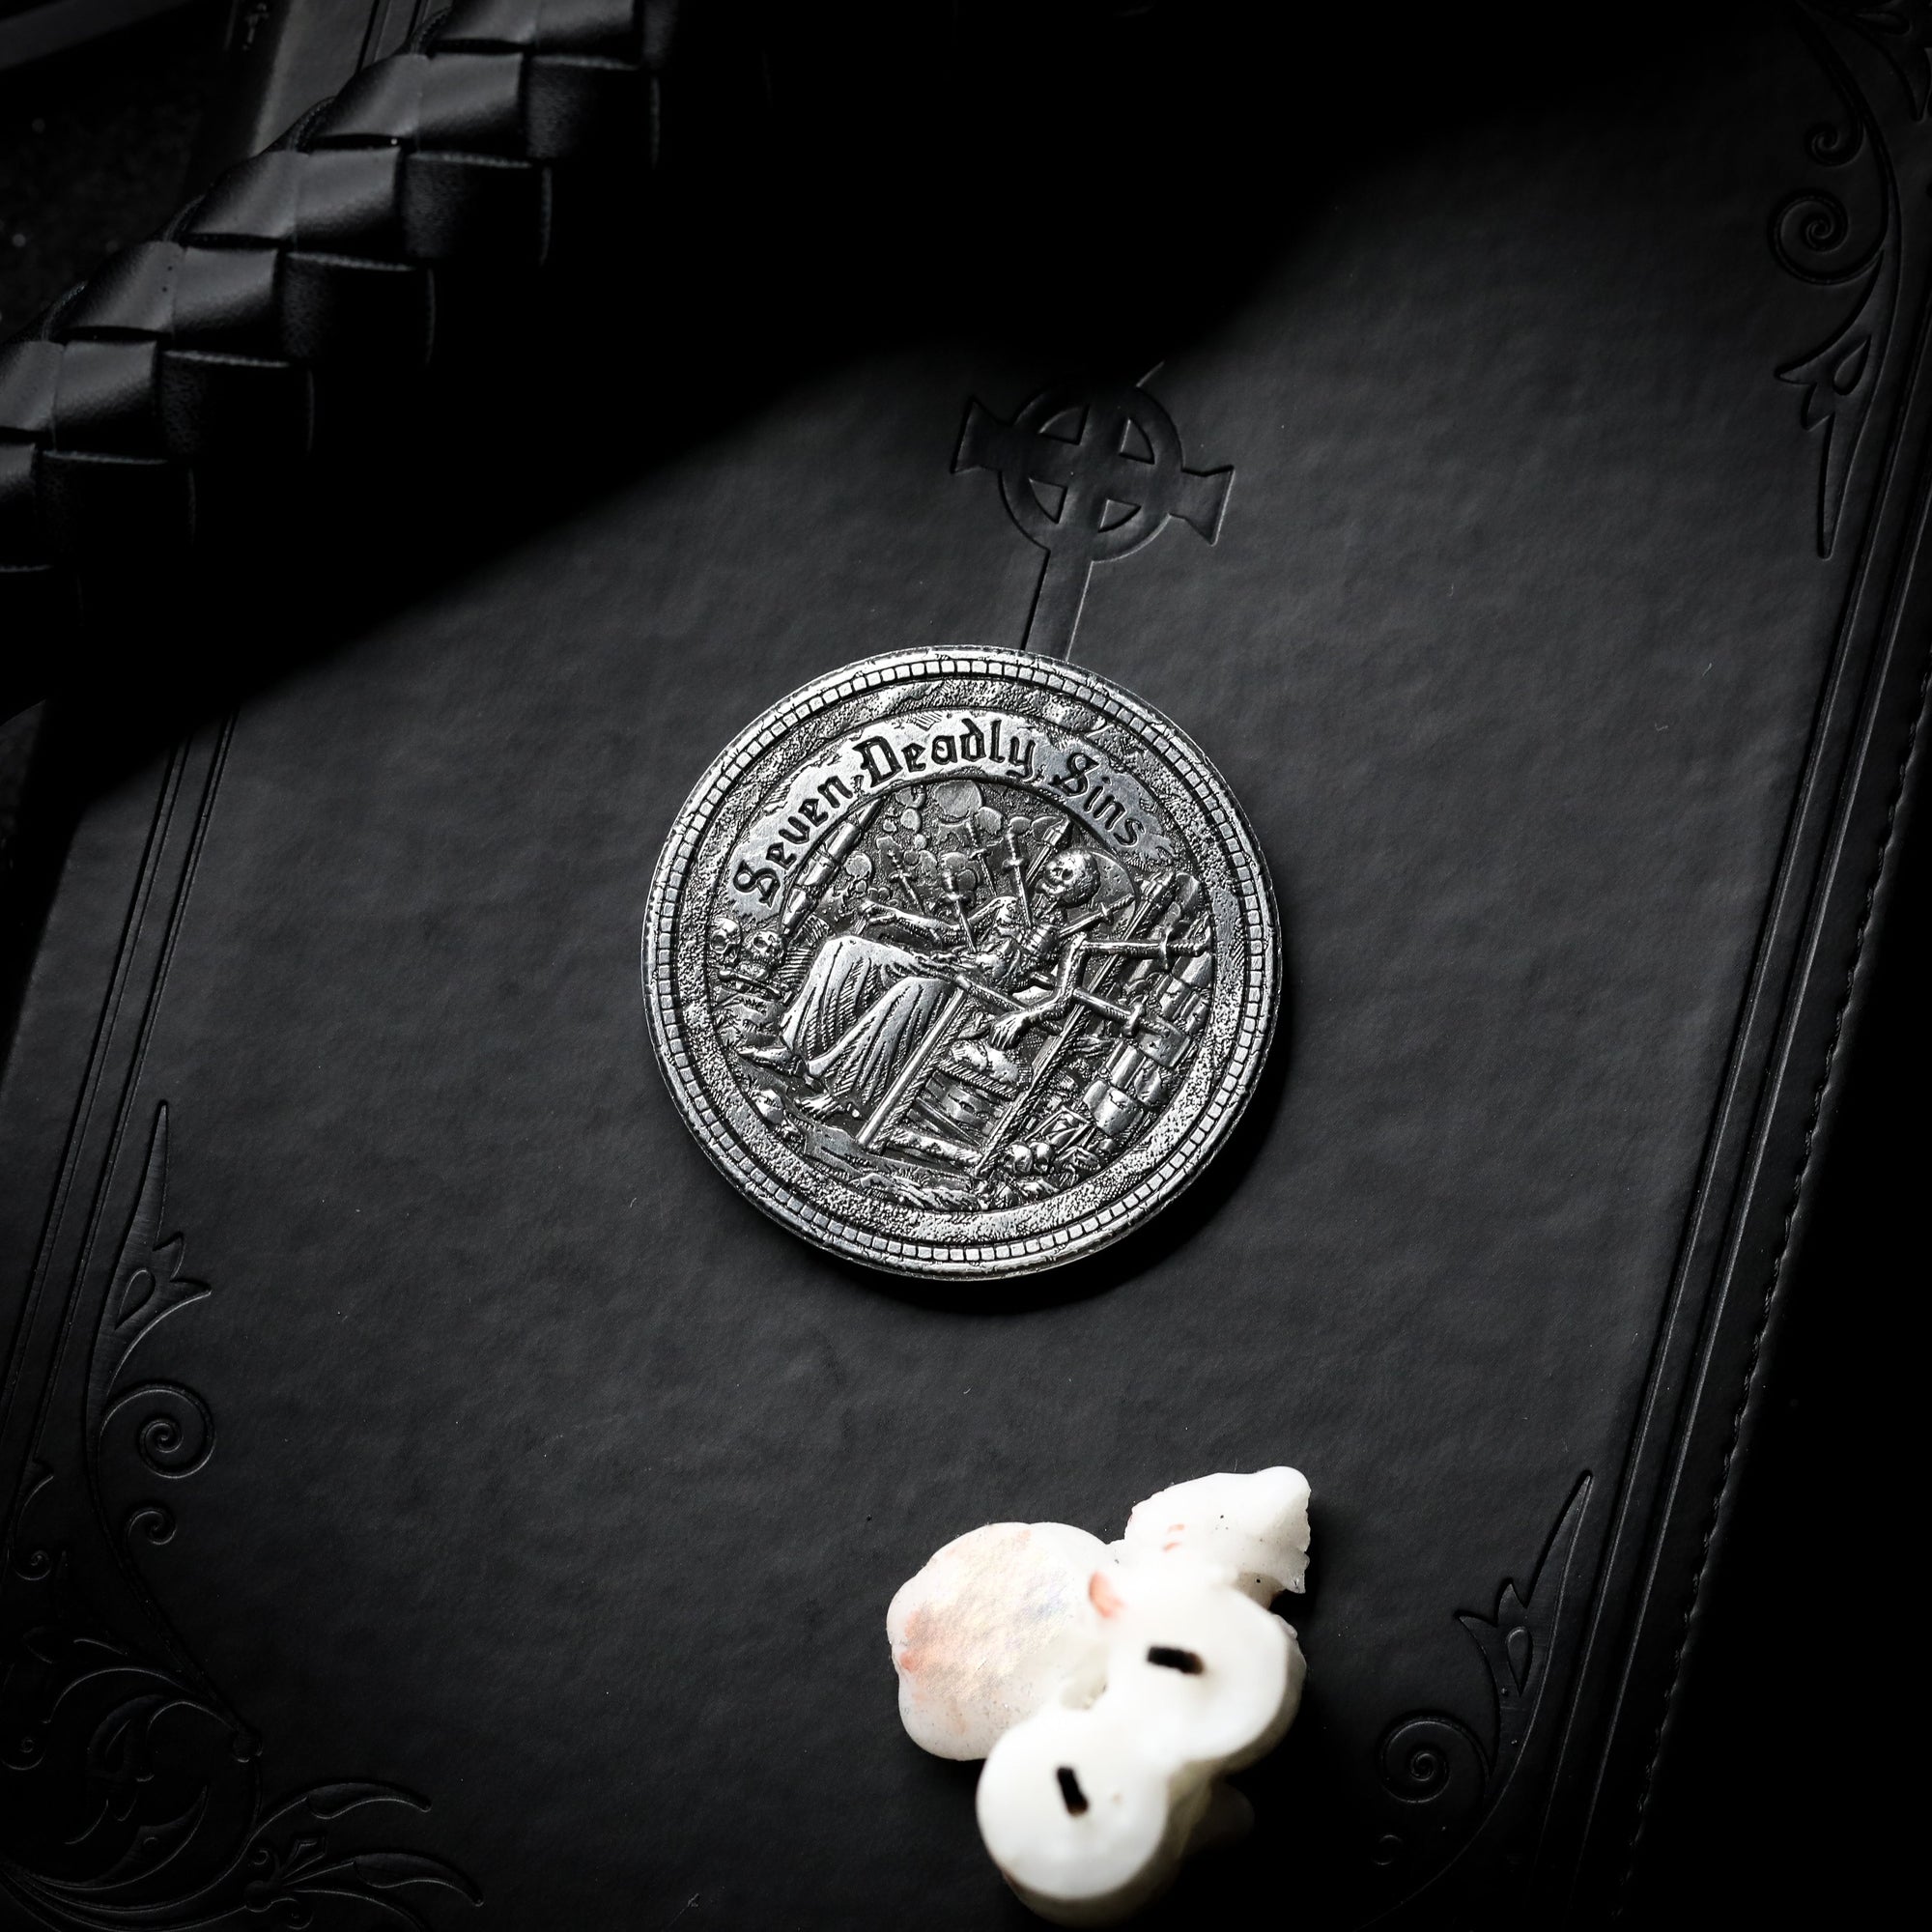 Seven Deadly Sins Coin Set Challenge Coin Ironsmith® 